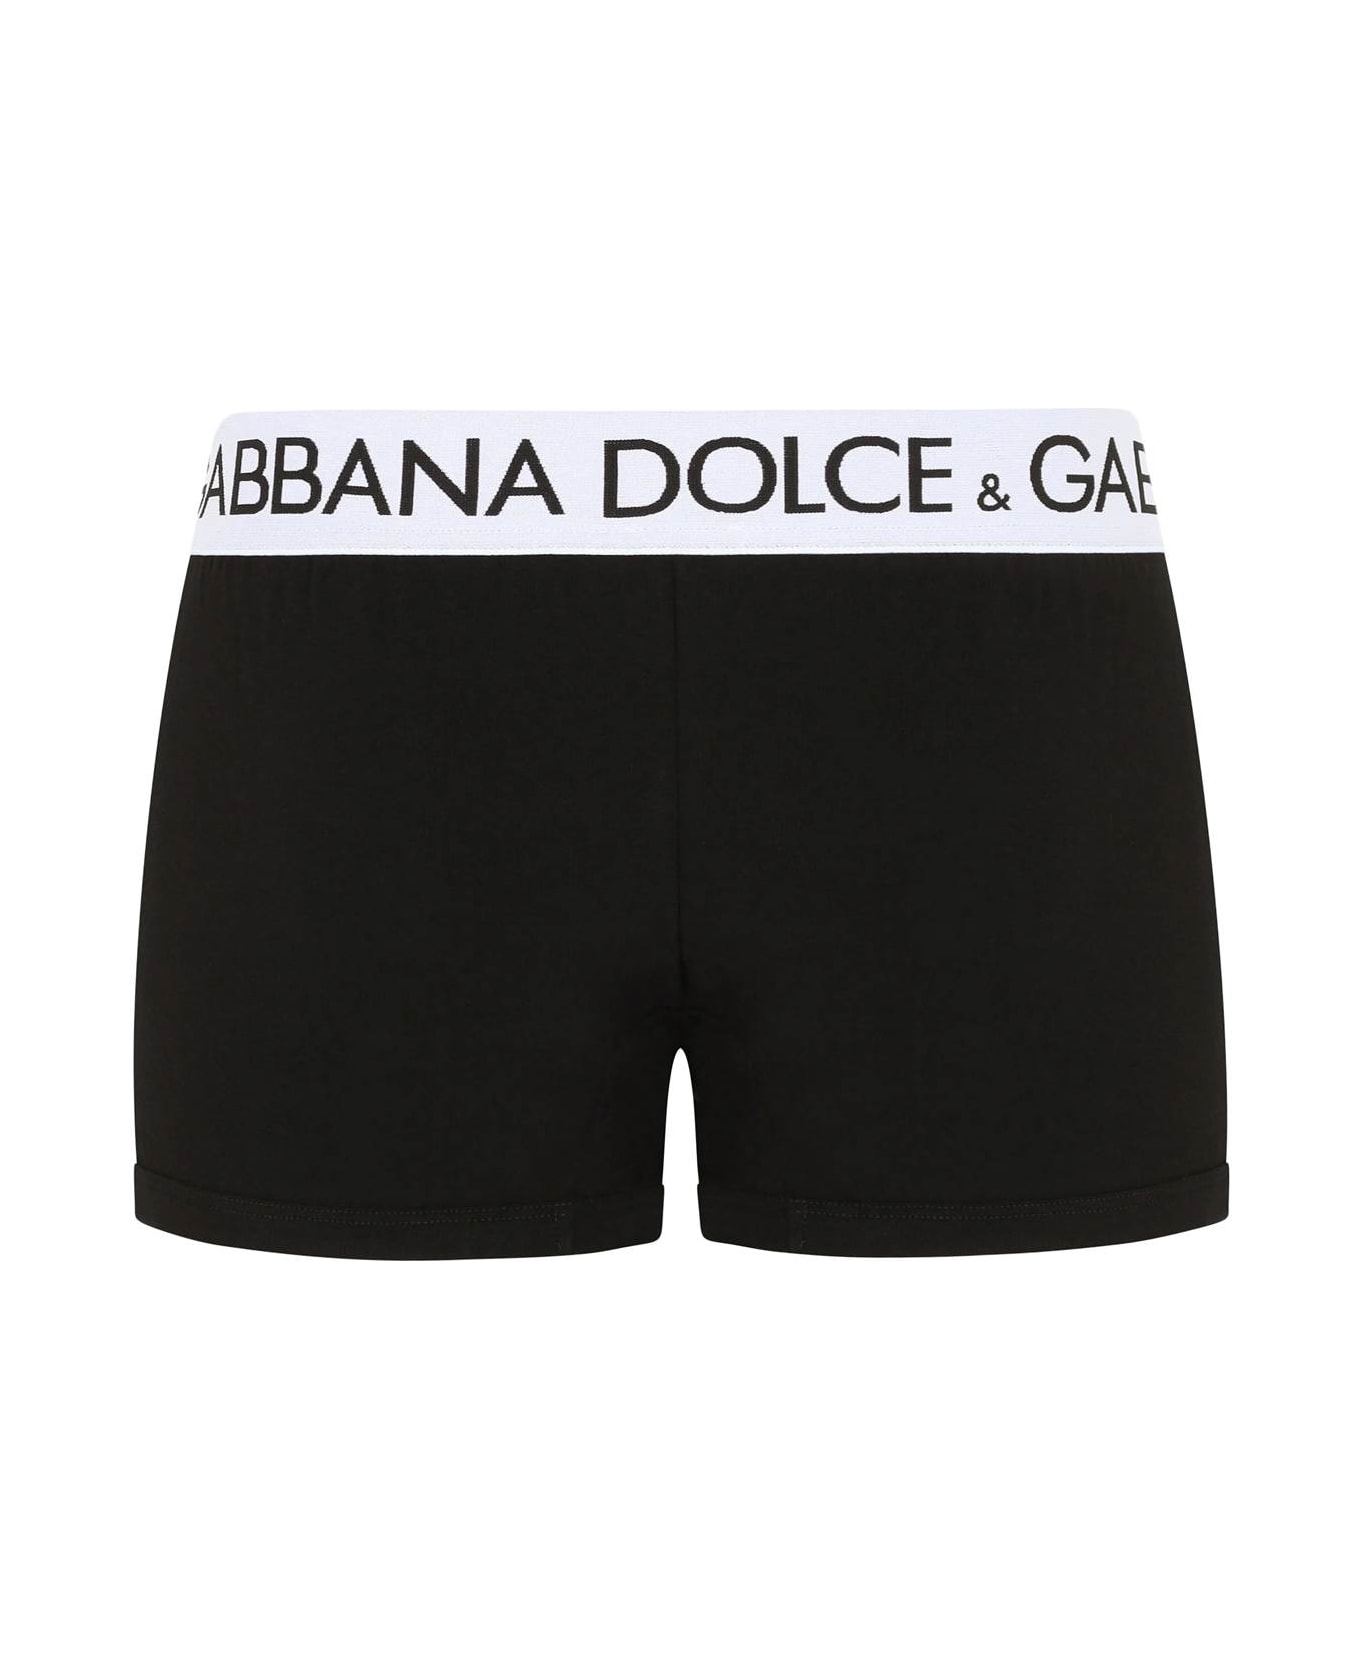 Dolce & Gabbana Black Boxer Briefs With Branded Waistband In Stretch Cotton Man - NERO (Black)